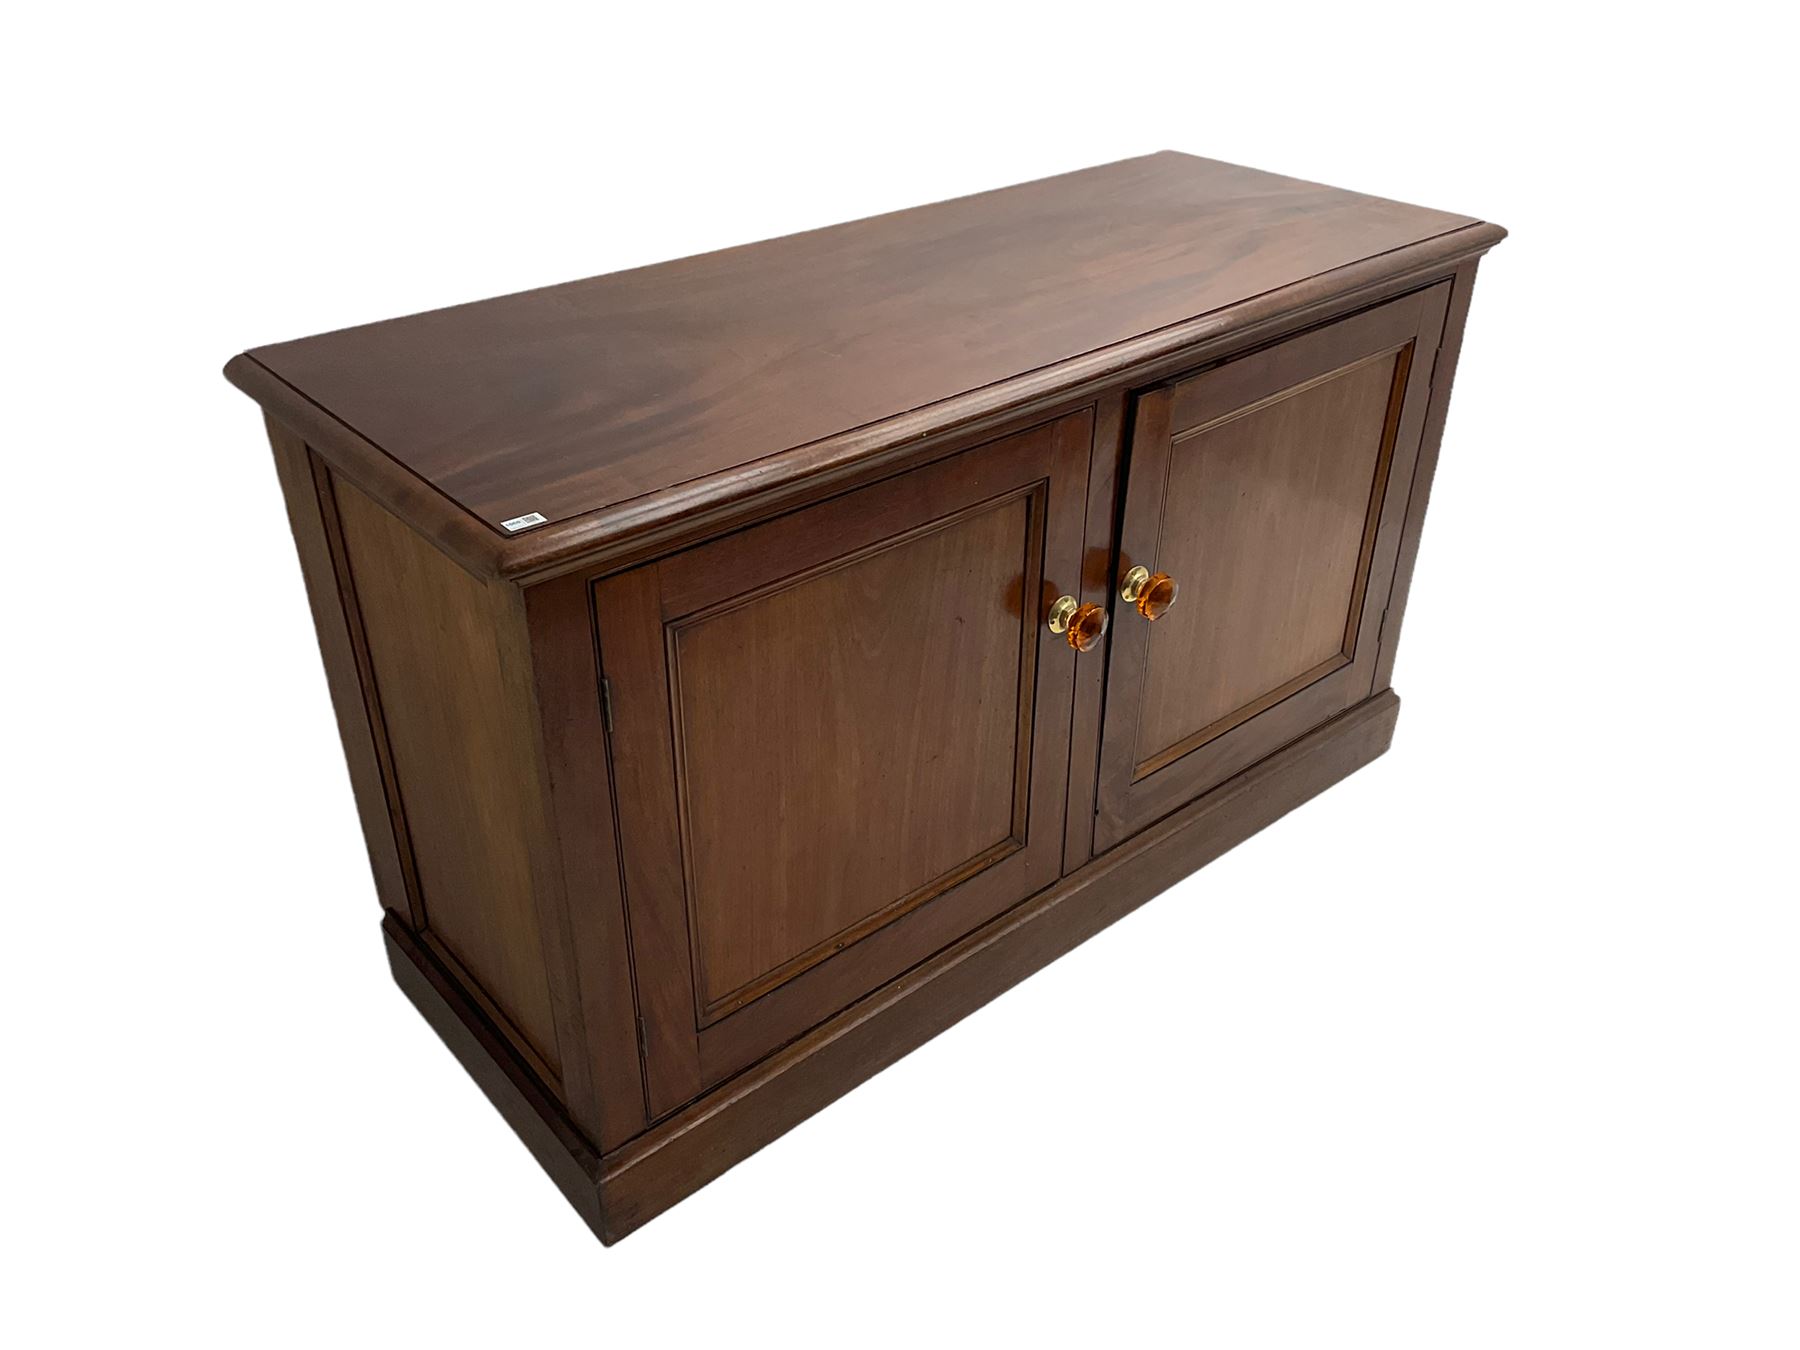 19th century mahogany plate warmer cupboard - Image 3 of 6